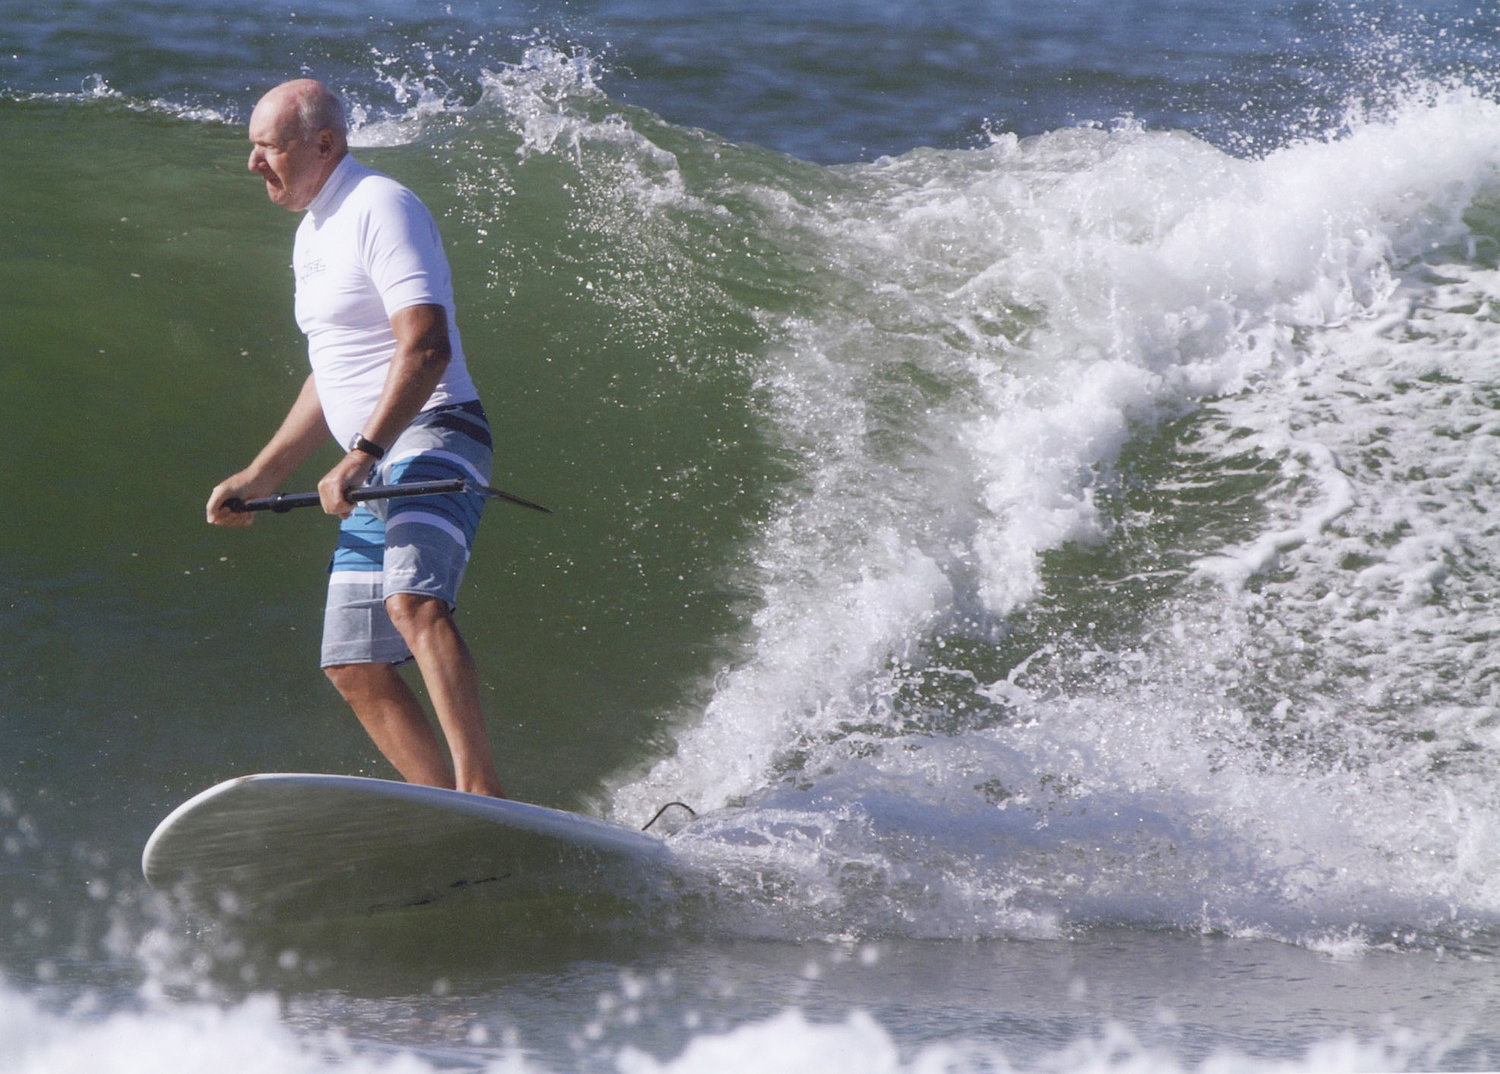 Spyder Wright surfing at Cisco Beach last summer.